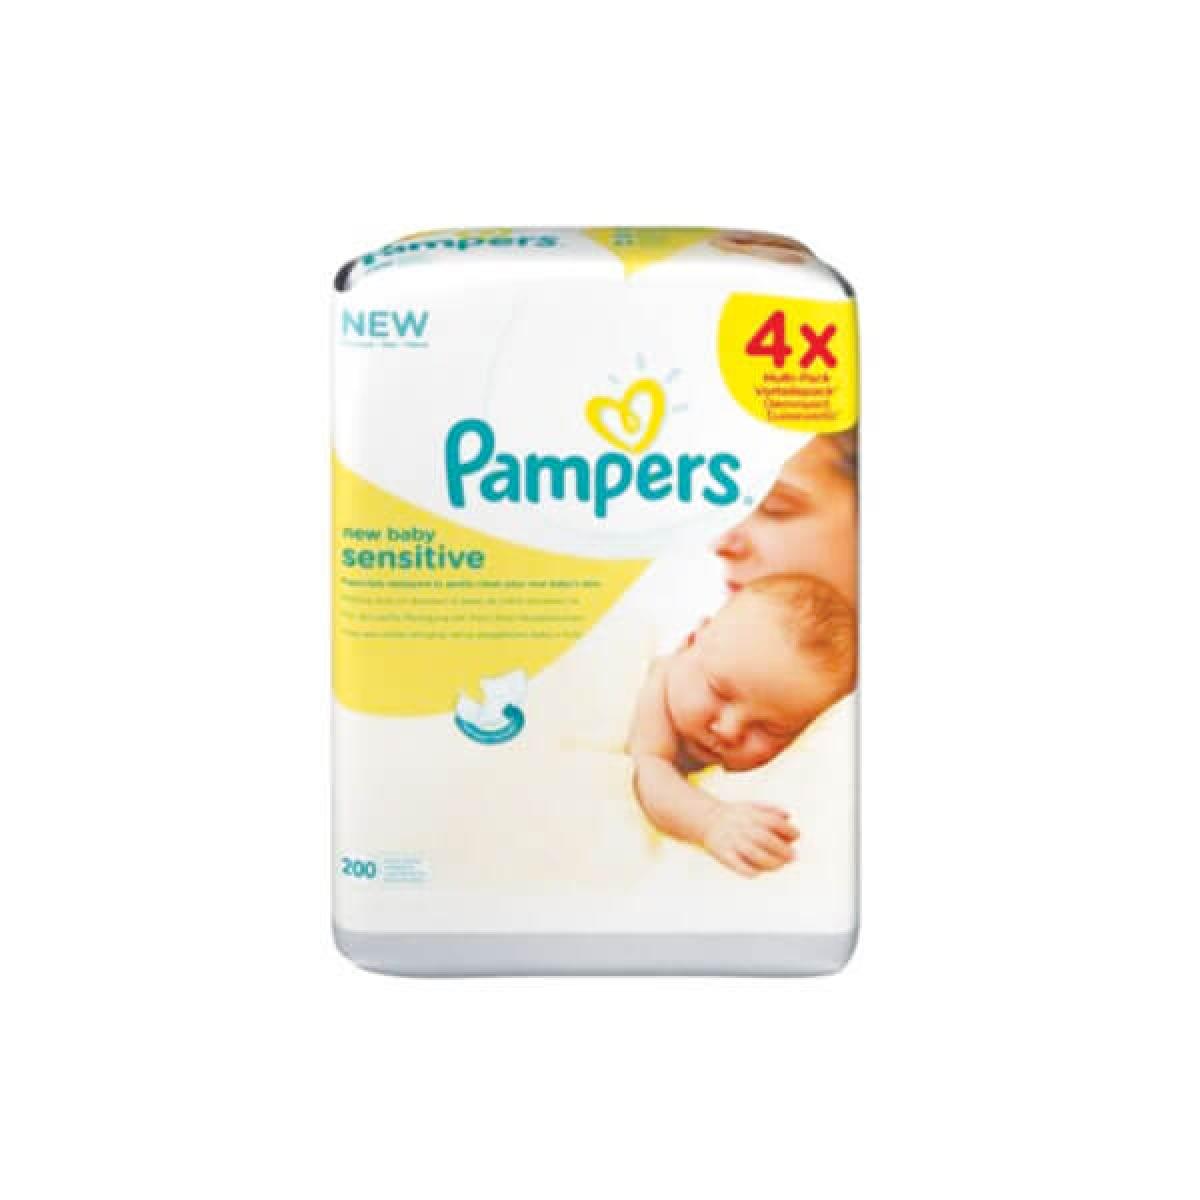 Pampers lingettes bébé new baby sensitive 4x50 lingettes - 200